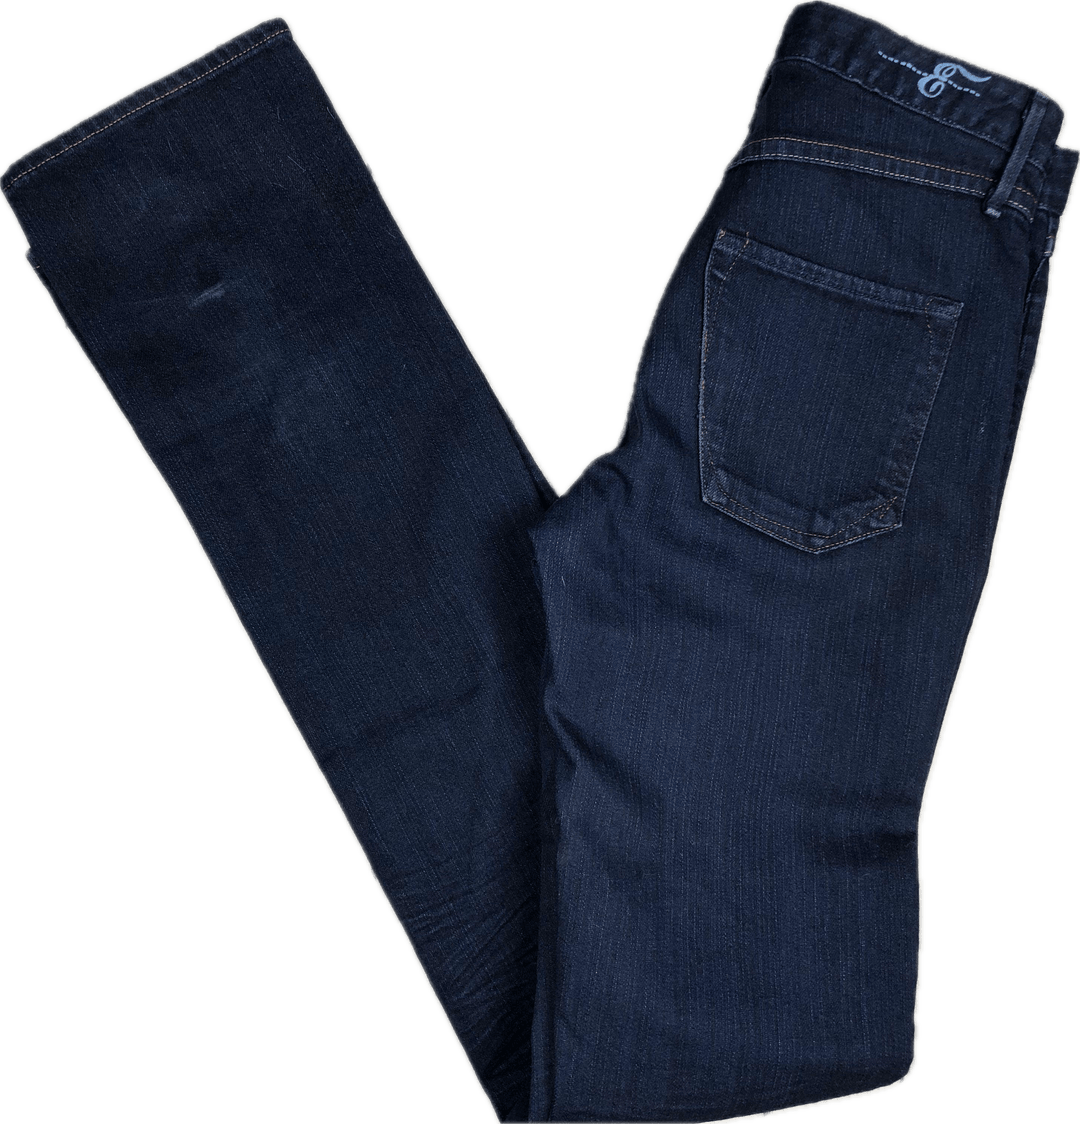 Earnest Sewn Dark Wash Stretch Skinny Jeans - Size 26 - Jean Pool